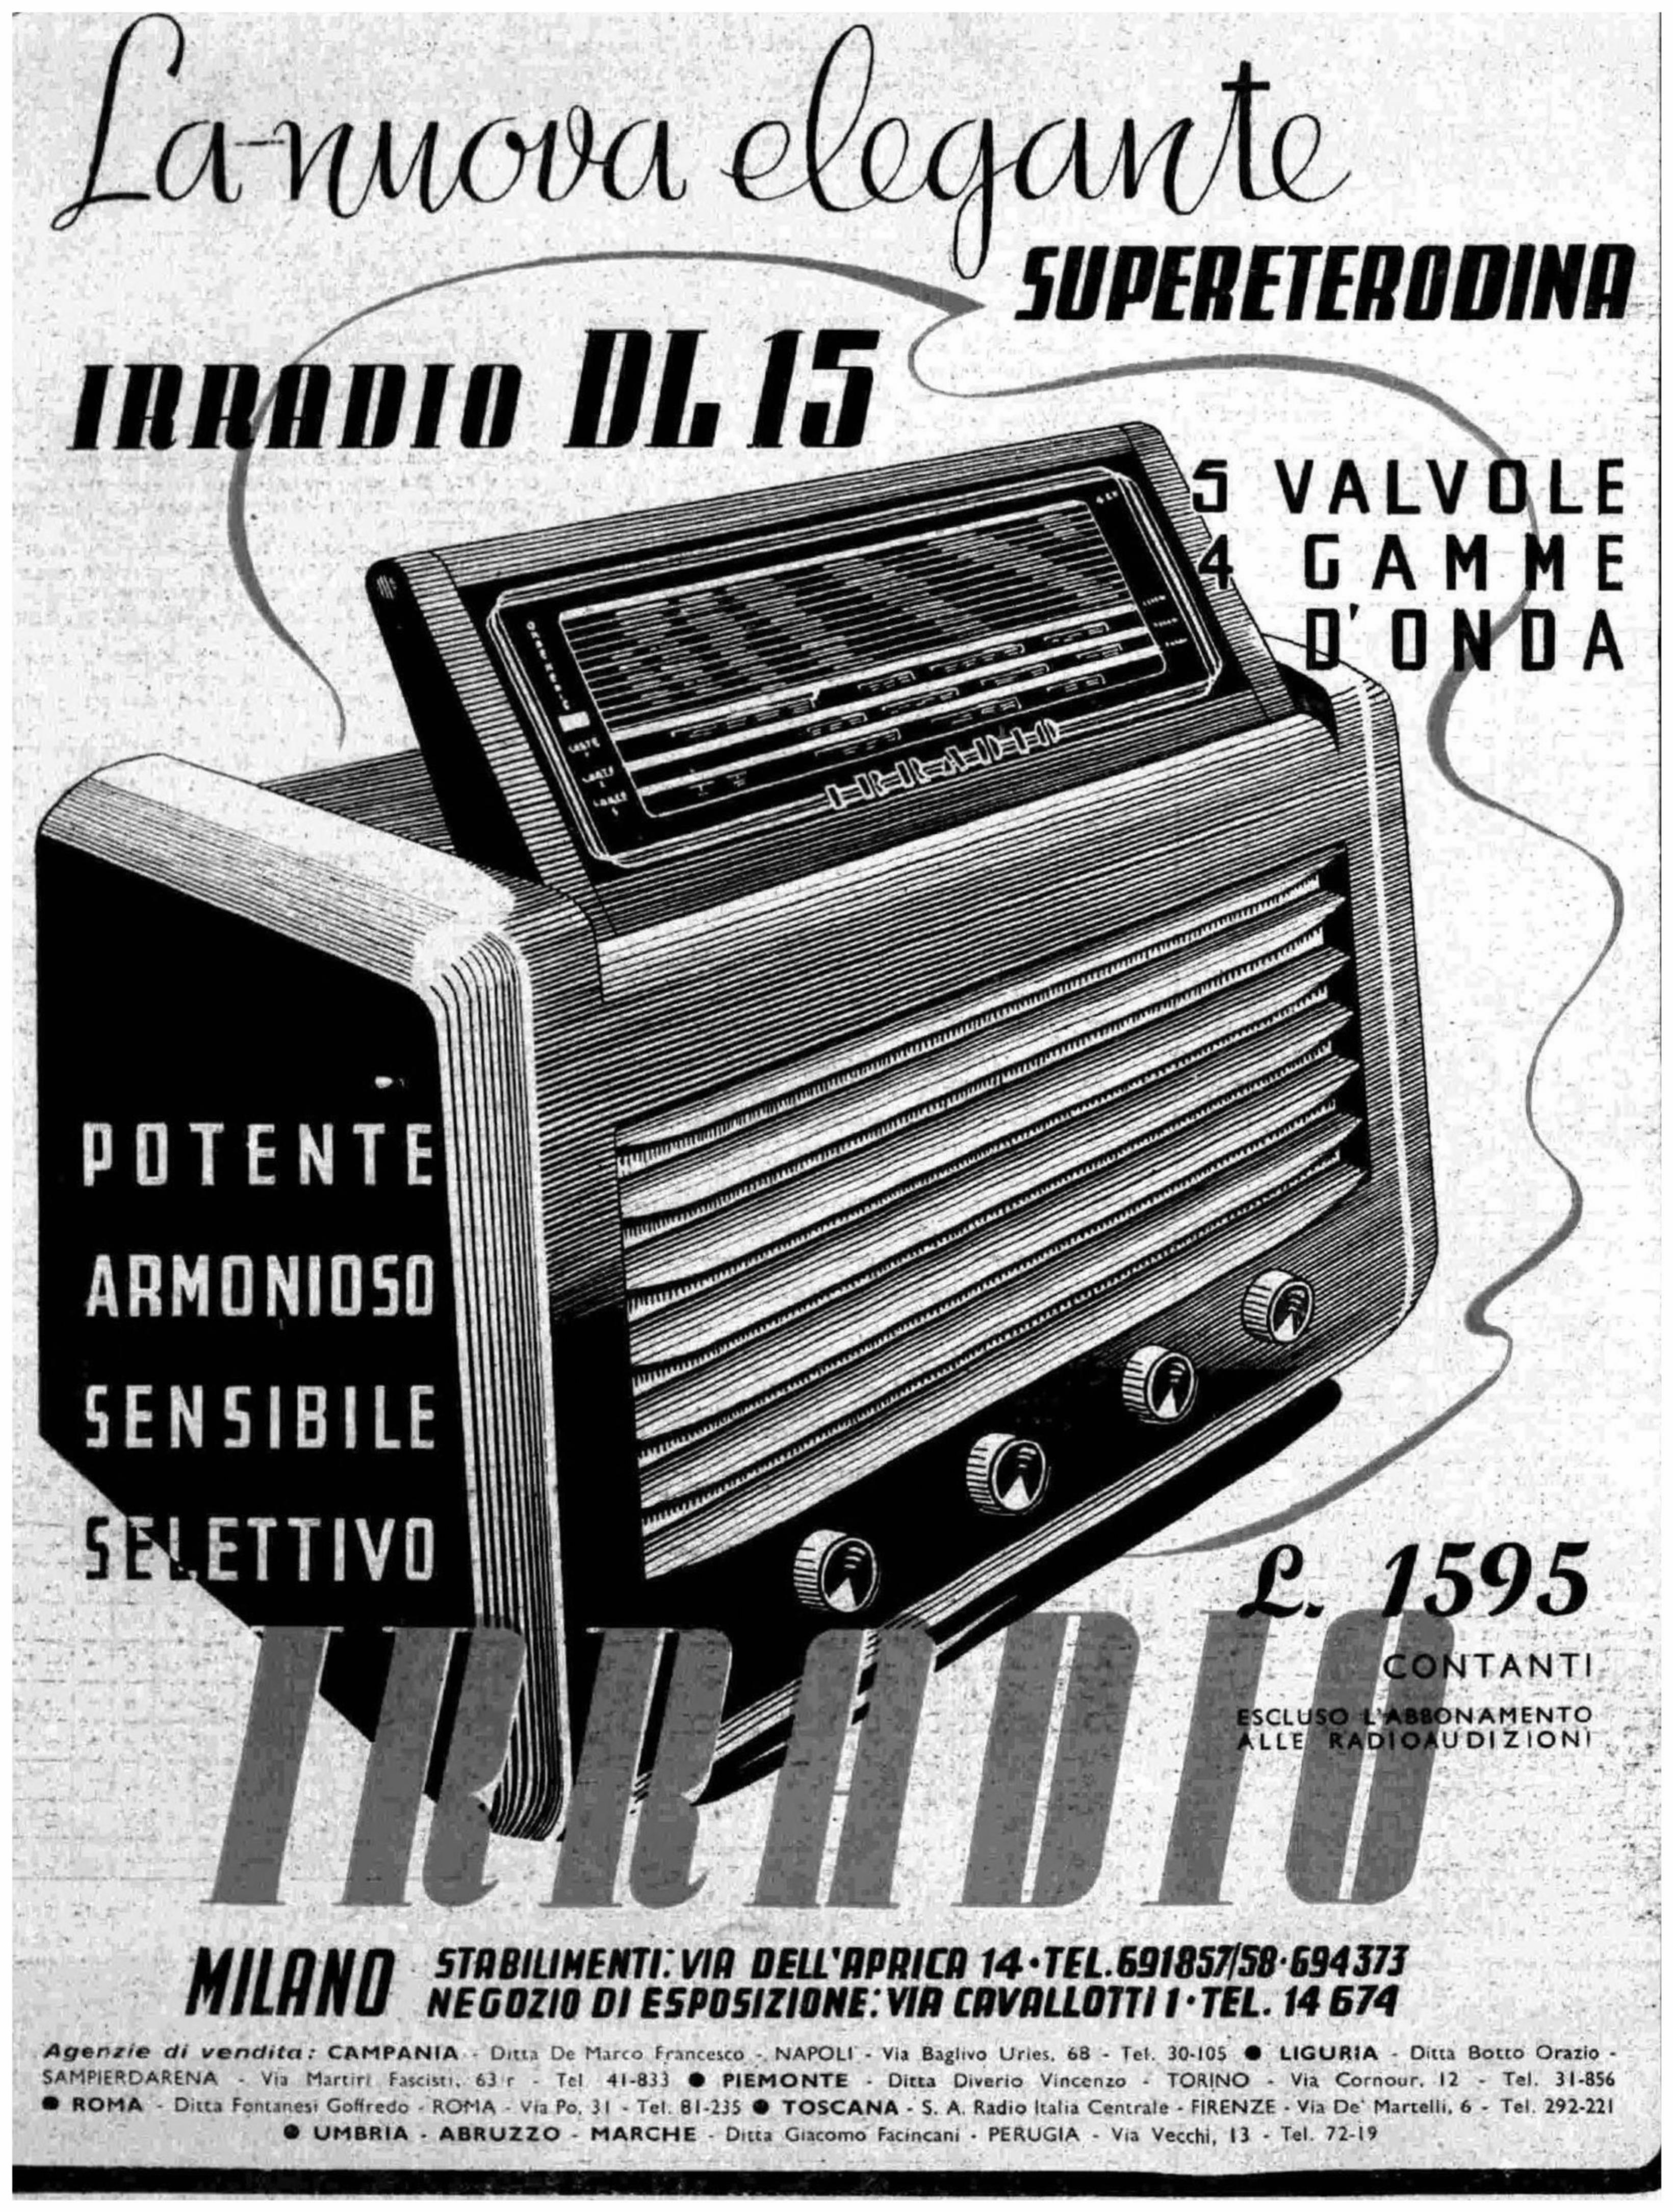 Irradio 1940 0.jpg